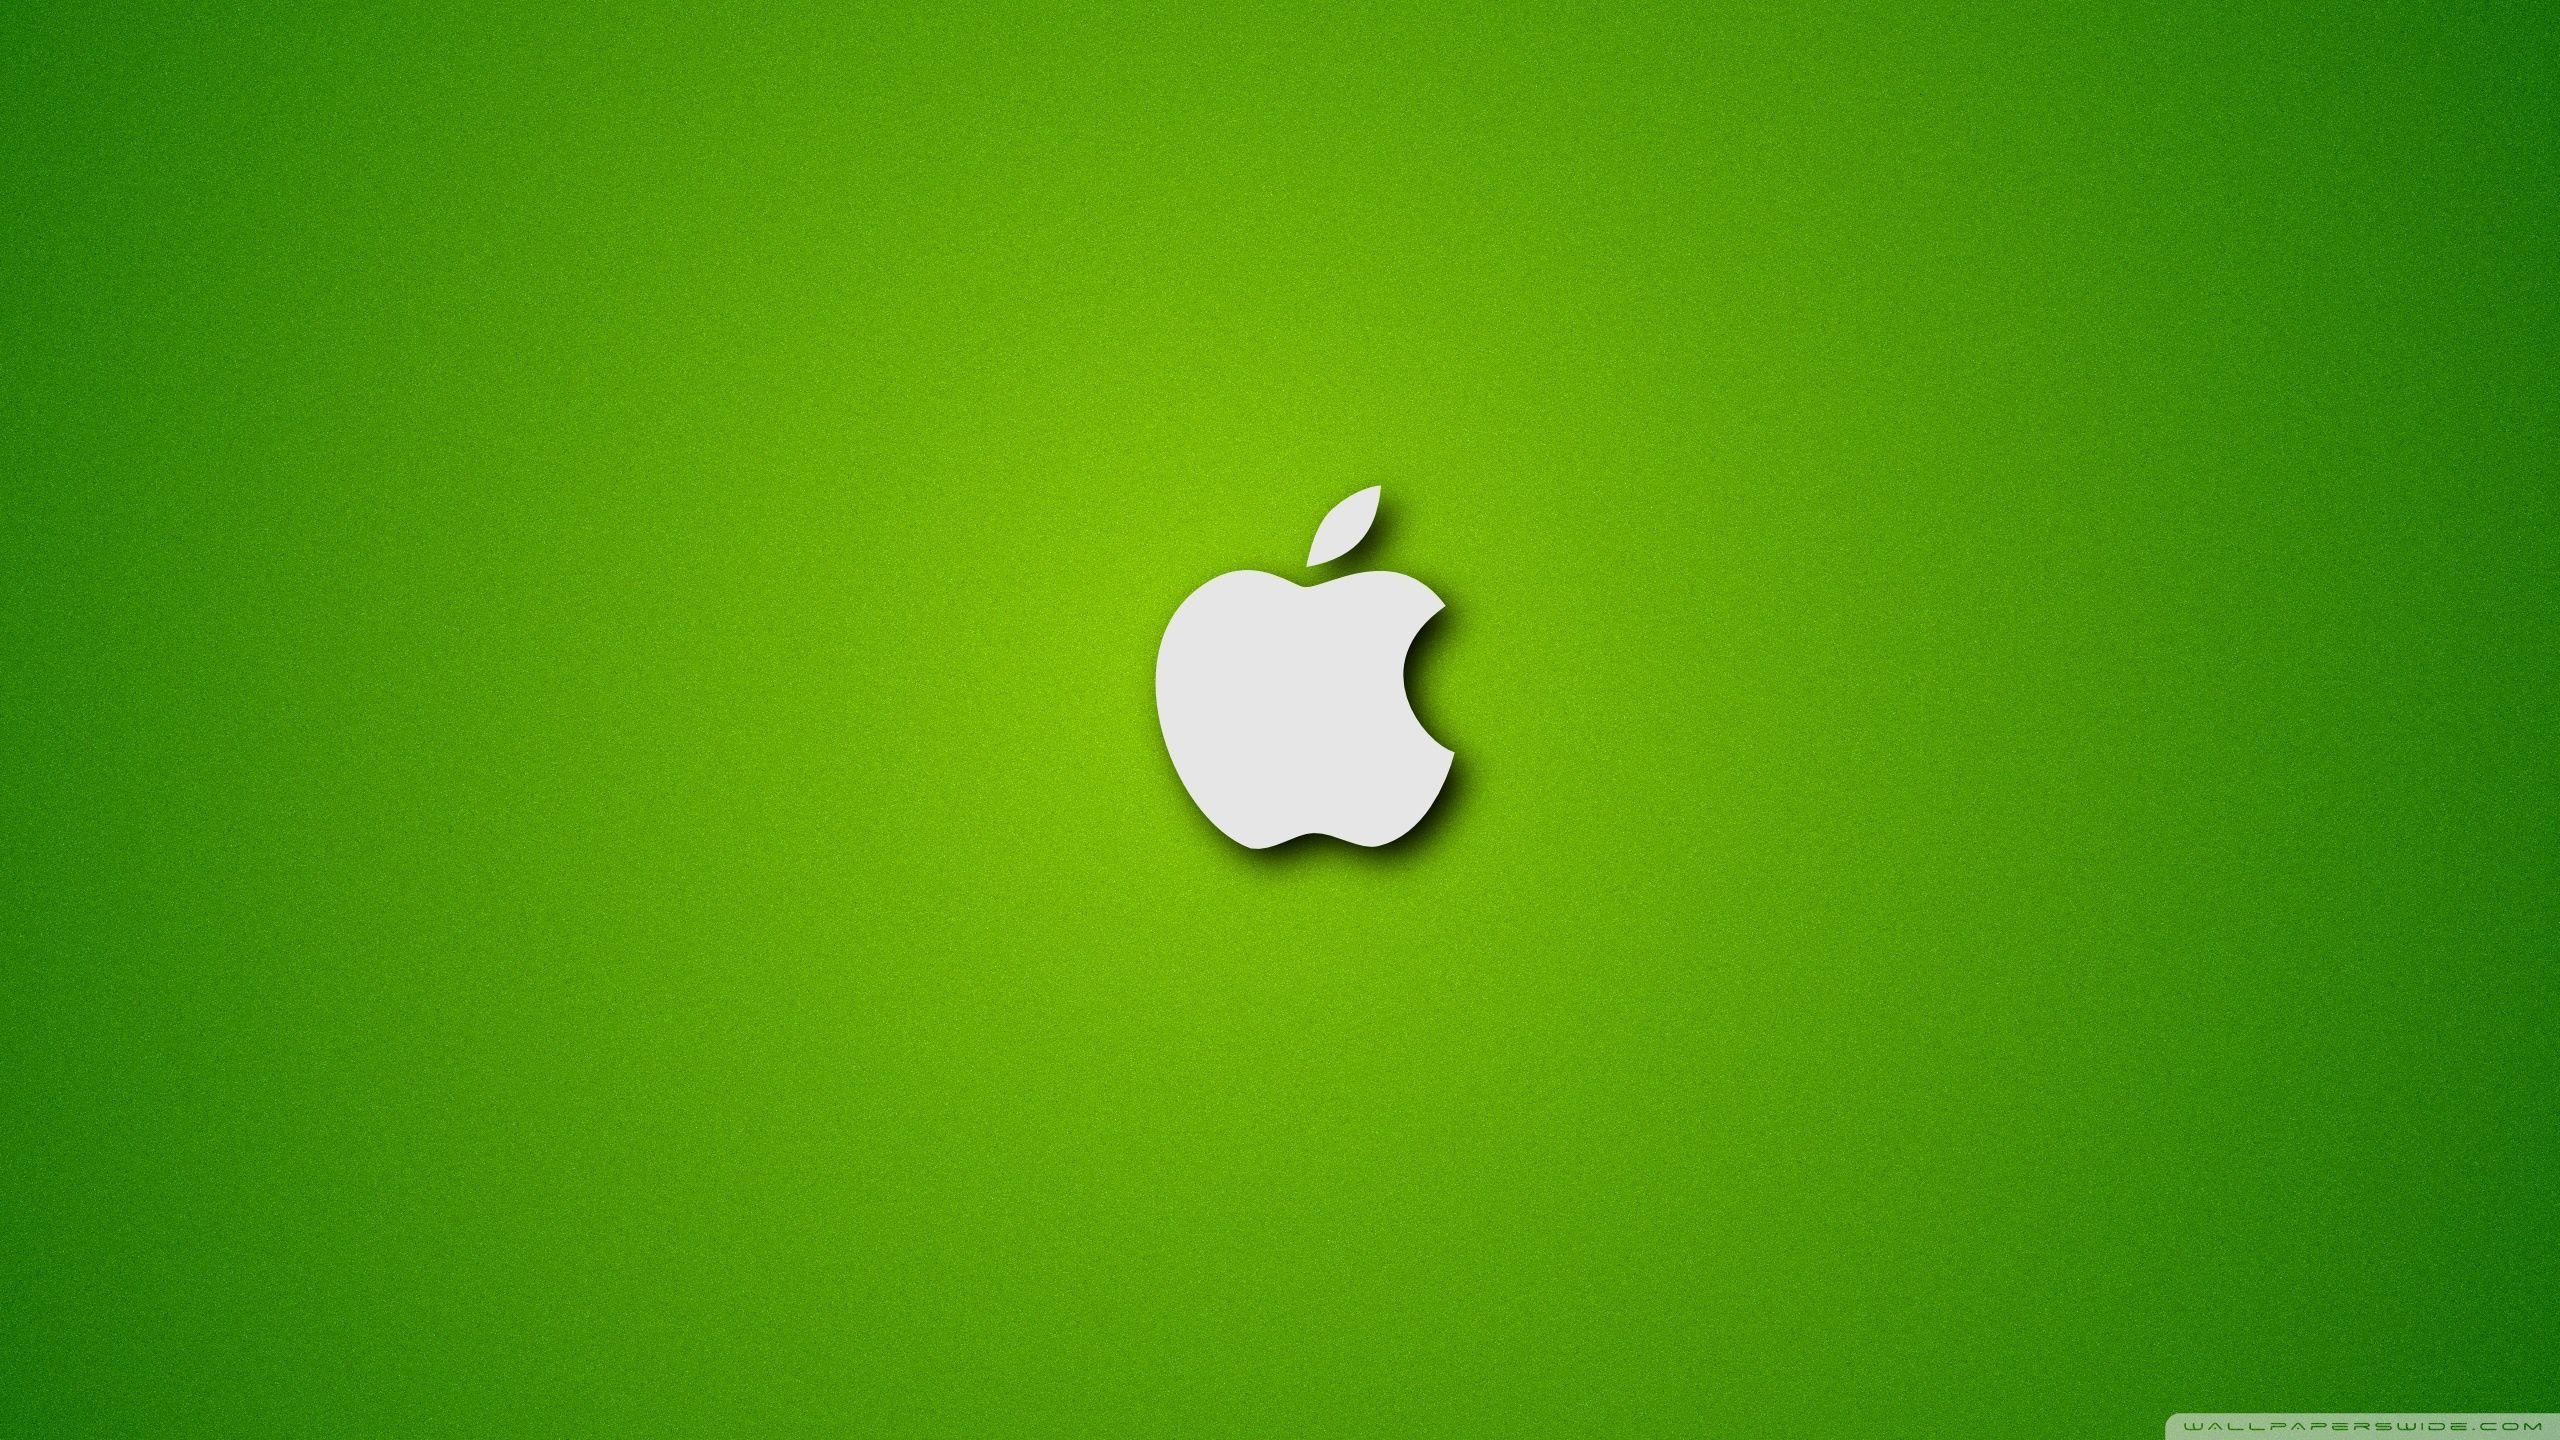 Green iPhone Logo - Apple Logo on Noisy Green Background ❤ 4K HD Desktop Wallpaper for ...